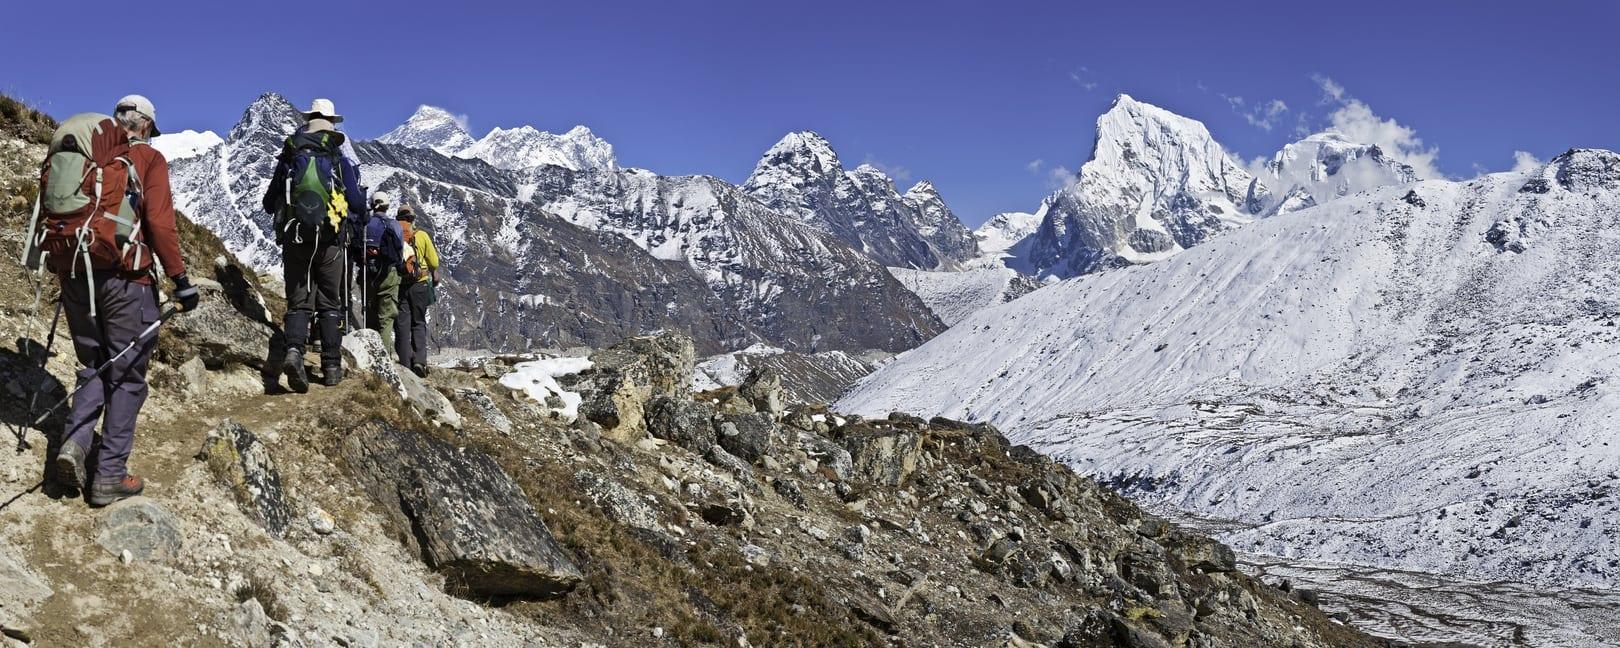 Mountaineers trekking in Everest National Park Himalayas Nepal